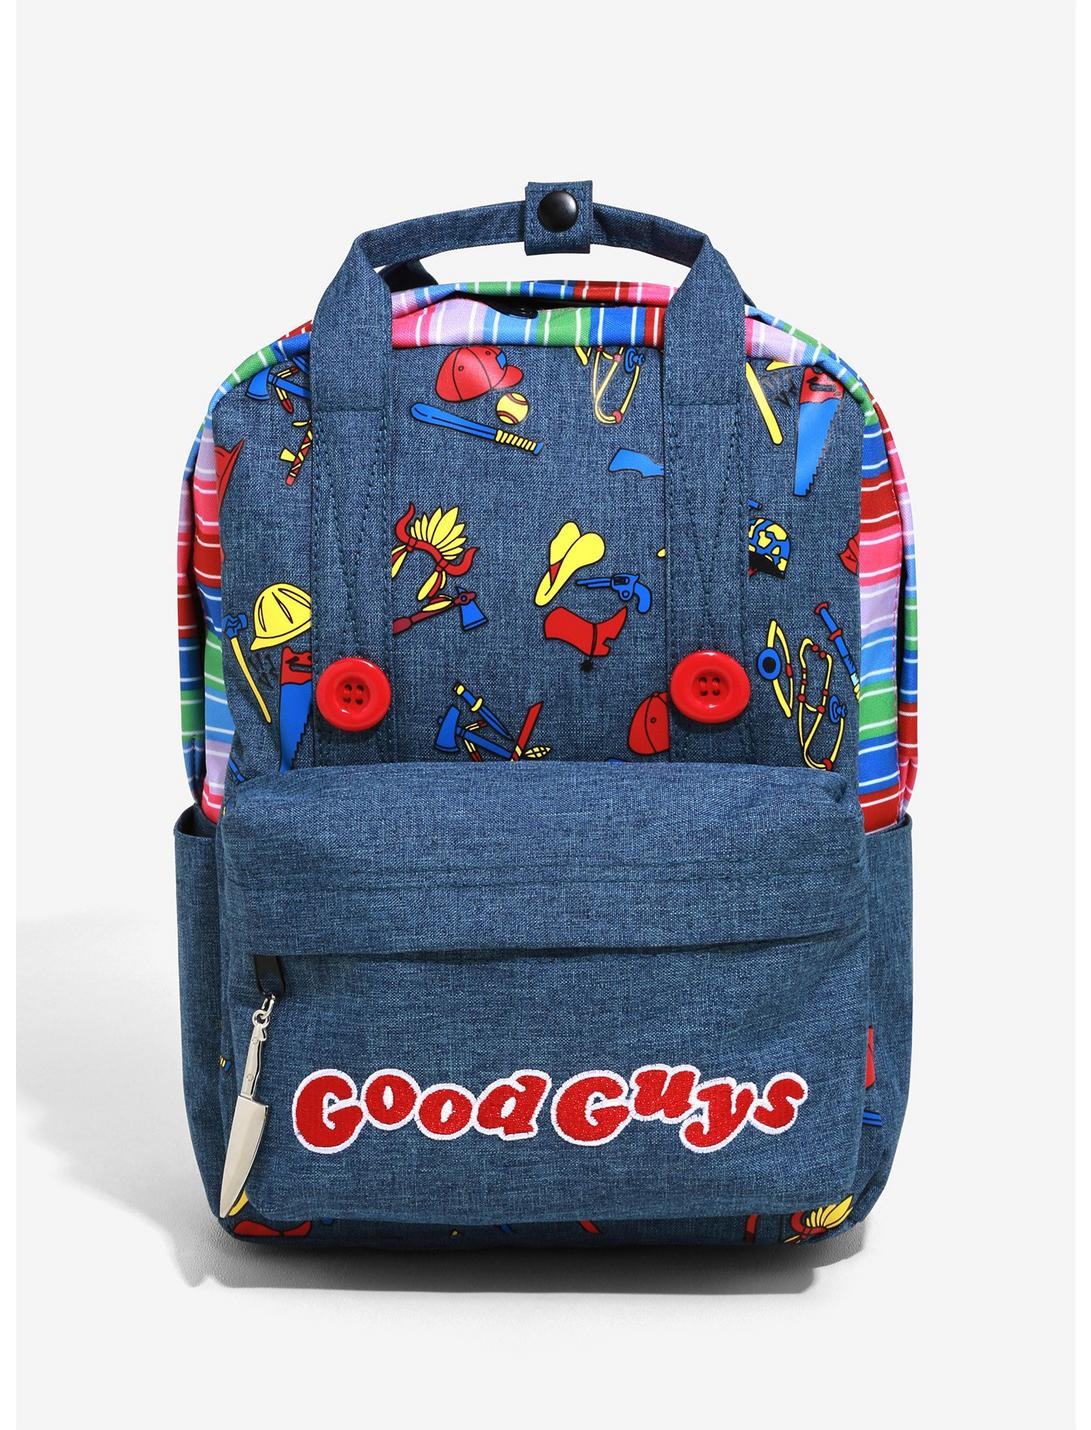 Child's Play Chucky Good Guys Mini Backpack, , hi-res